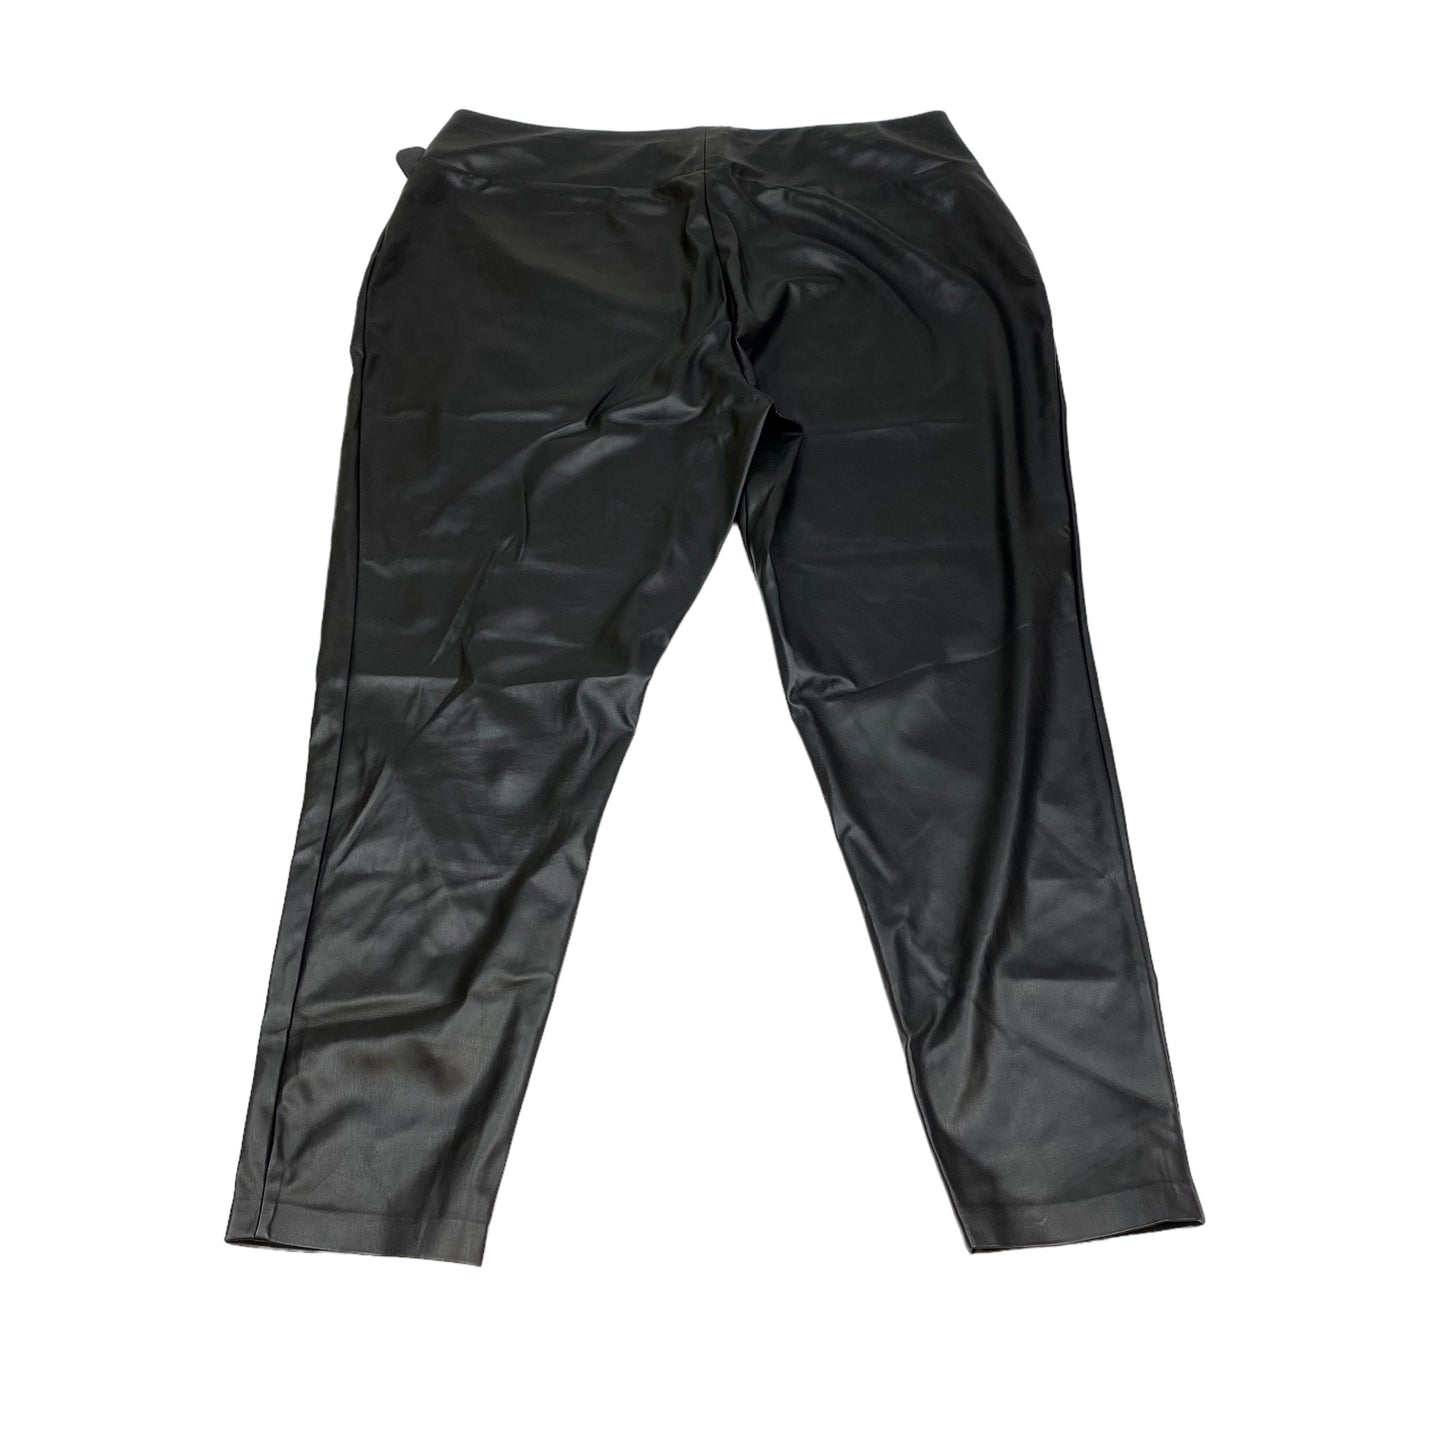 Black Pants Leggings The Drop, Size 2x